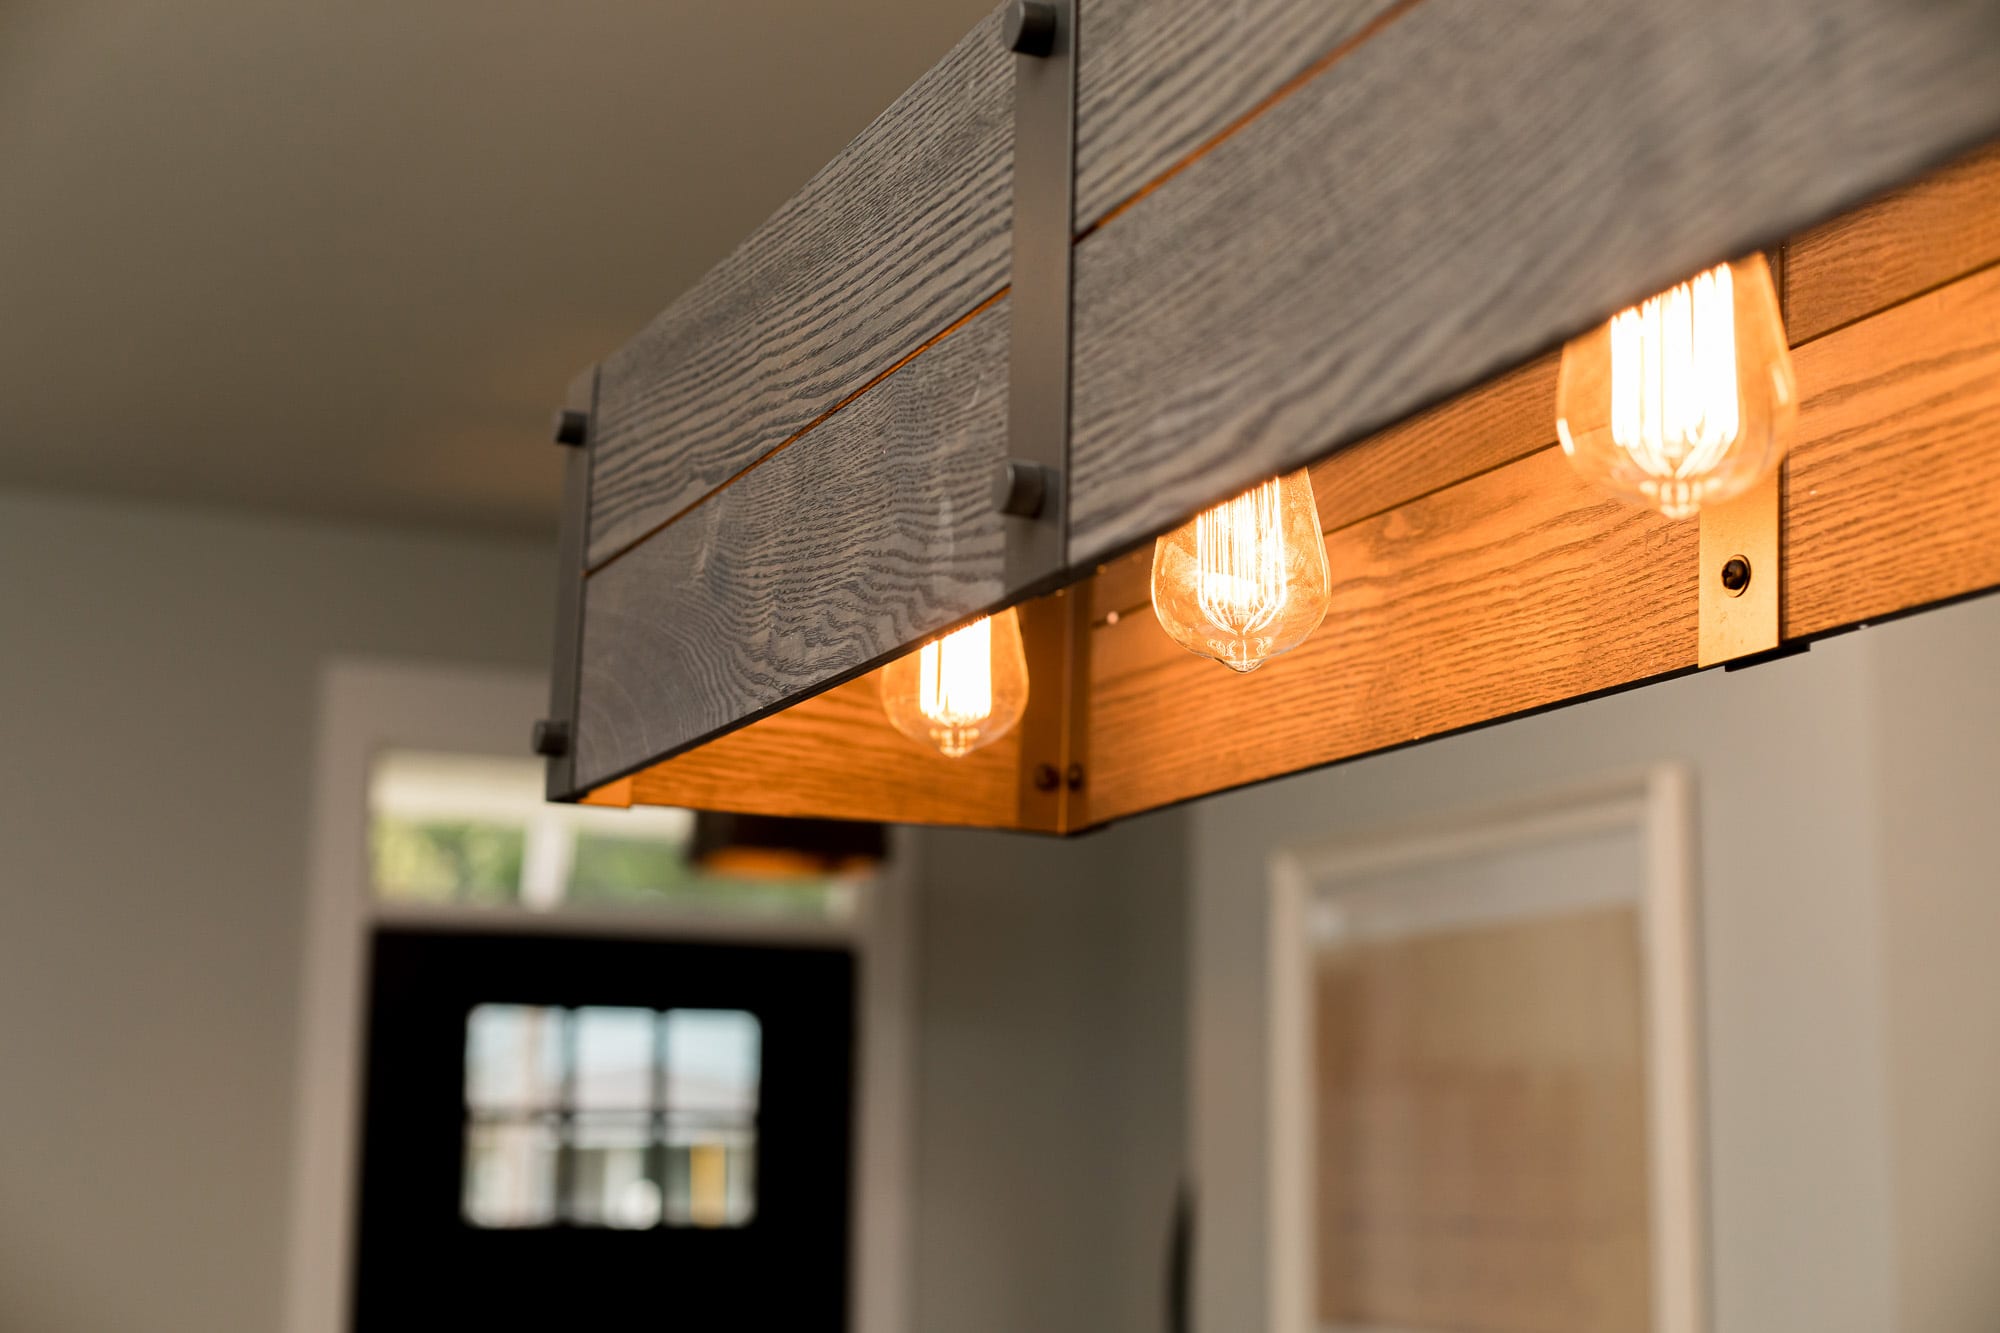 Unique design feature, aDoor rustic lighting set in wood with vintage bulb.